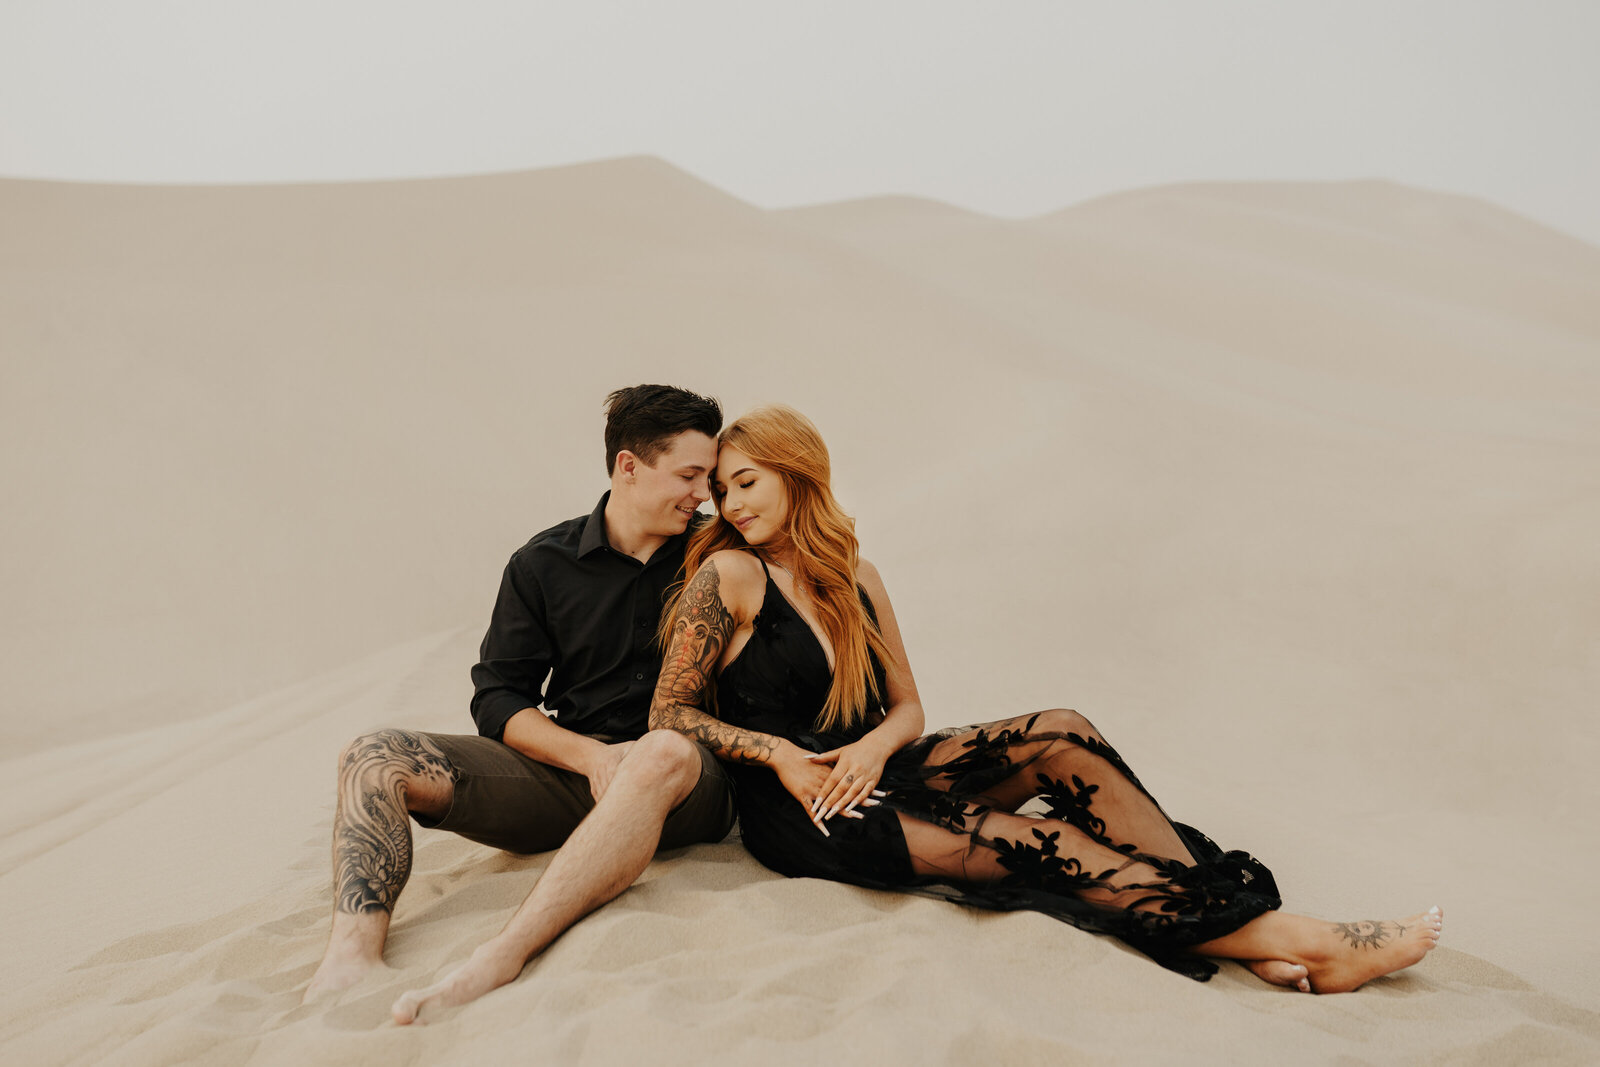 Sand Dunes Couples Photos - Raquel King Photography11